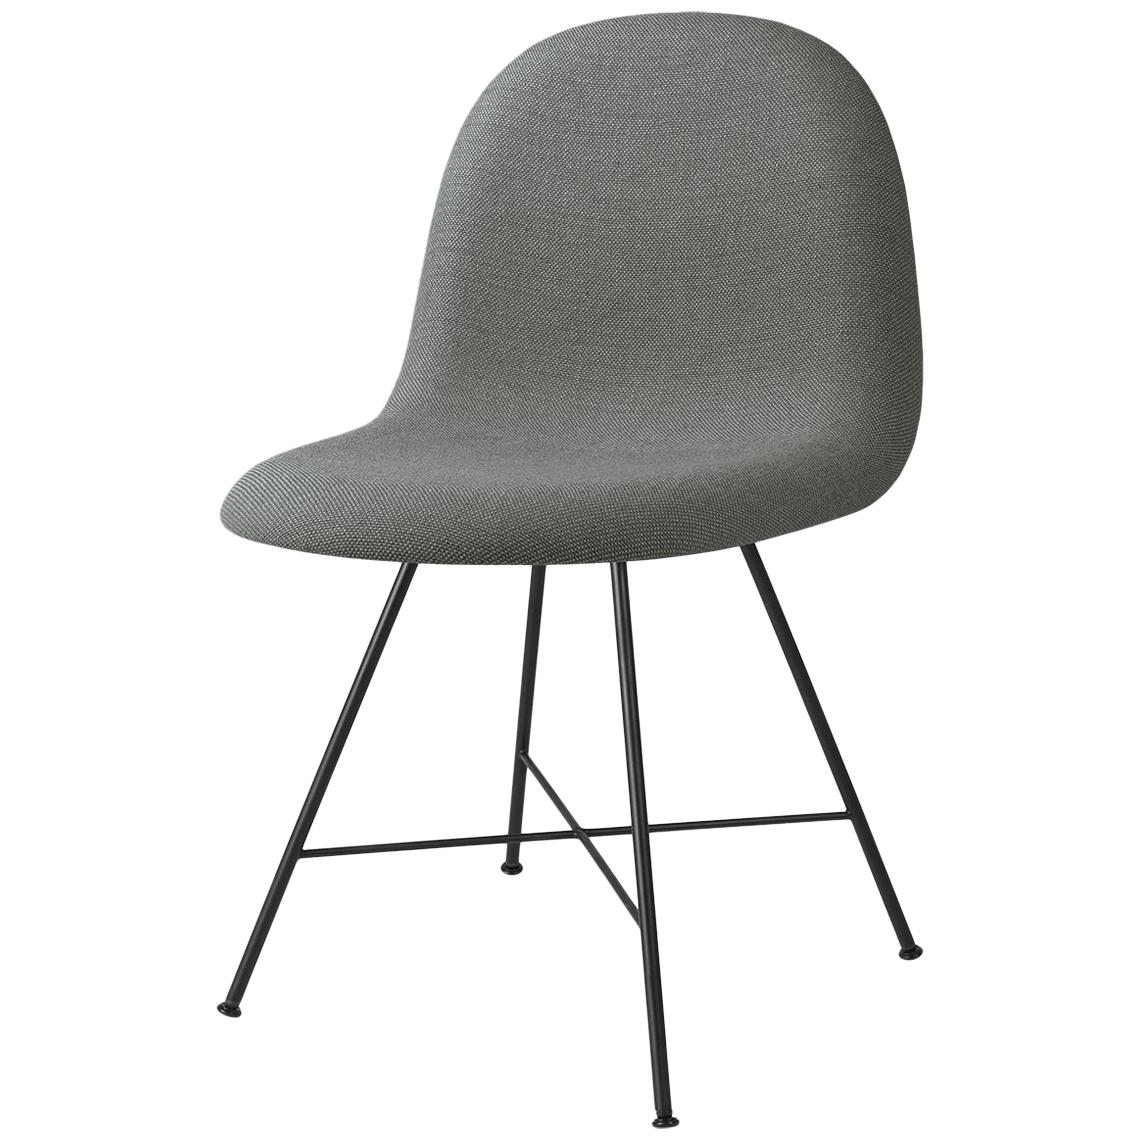 3D Dining Chair, Fully Upholstered, Center Base